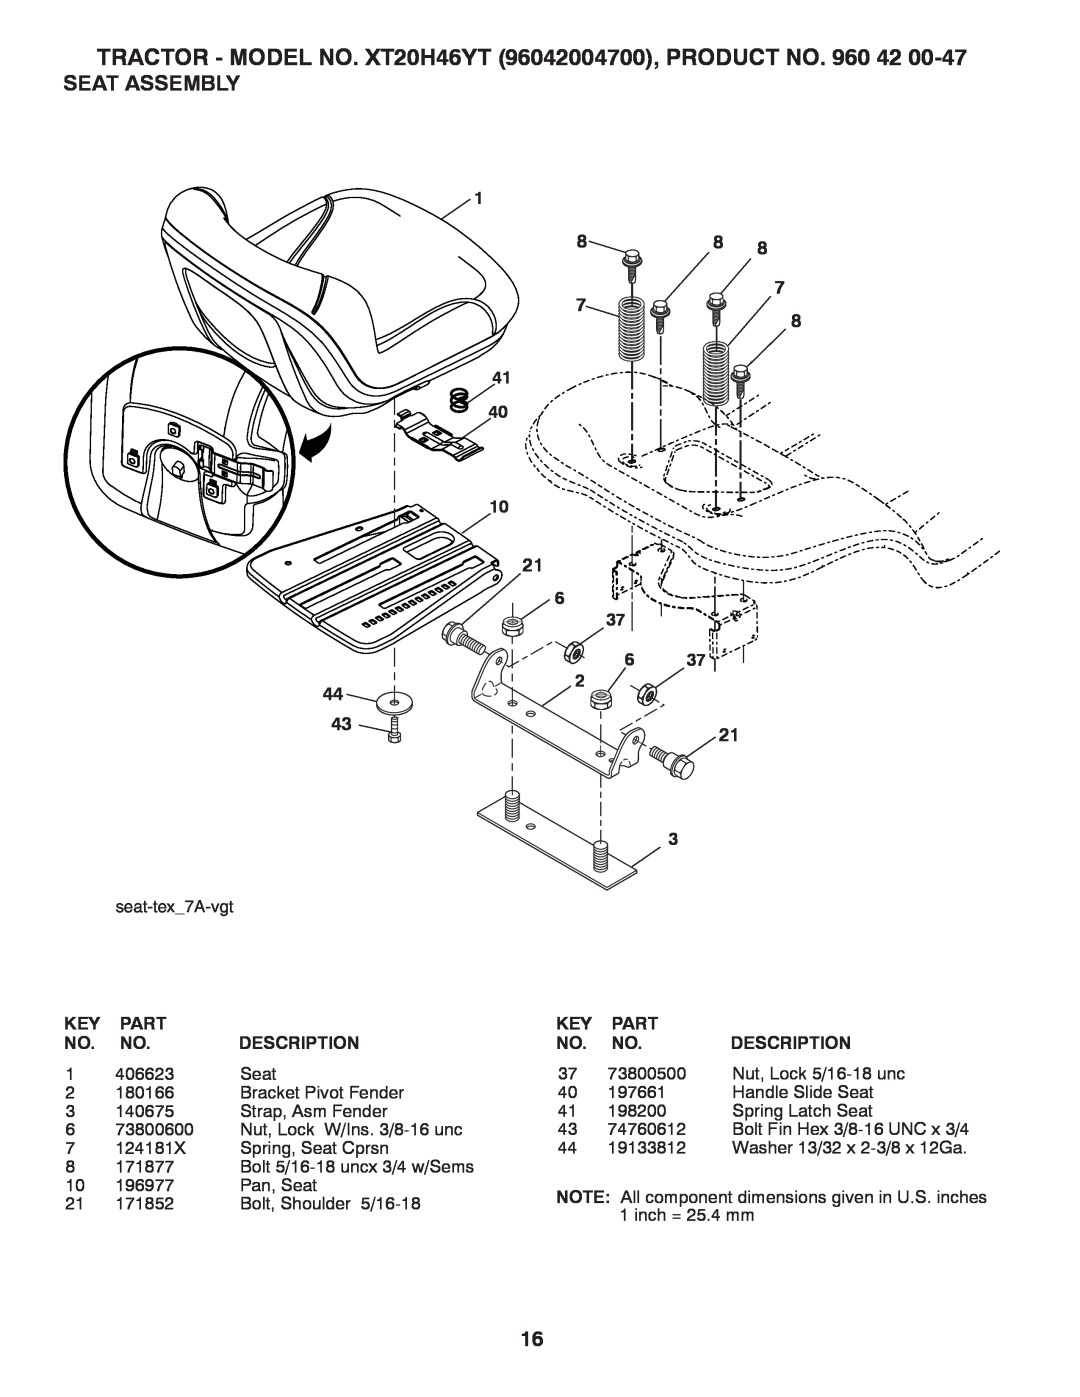 Poulan 412413 manual Seat Assembly, TRACTOR - MODEL NO. XT20H46YT 96042004700, PRODUCT NO, Part, Description 